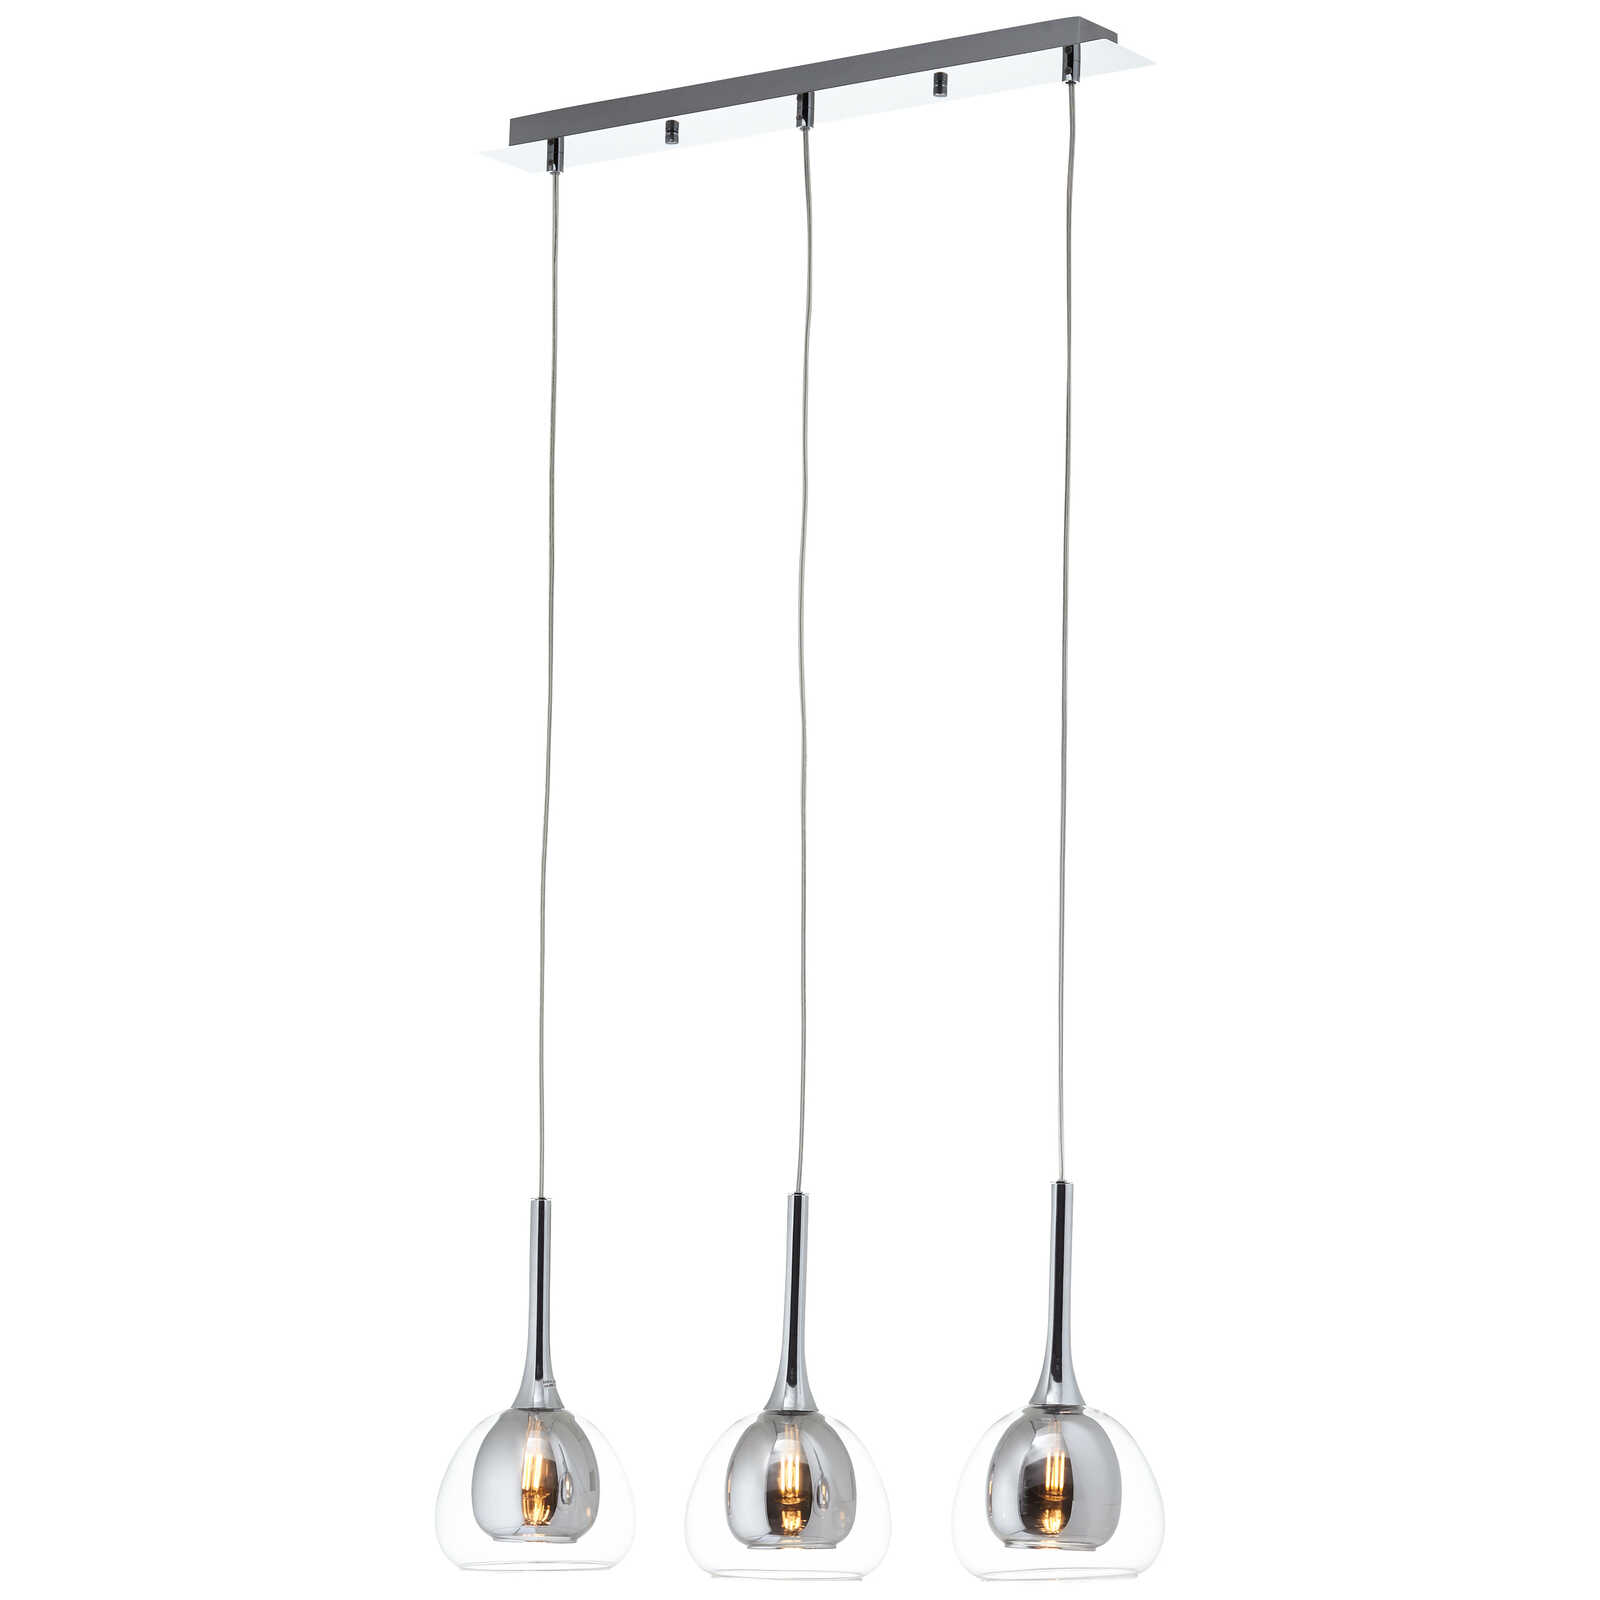             Glazen hanglamp - Iris 3 - Metallic
        